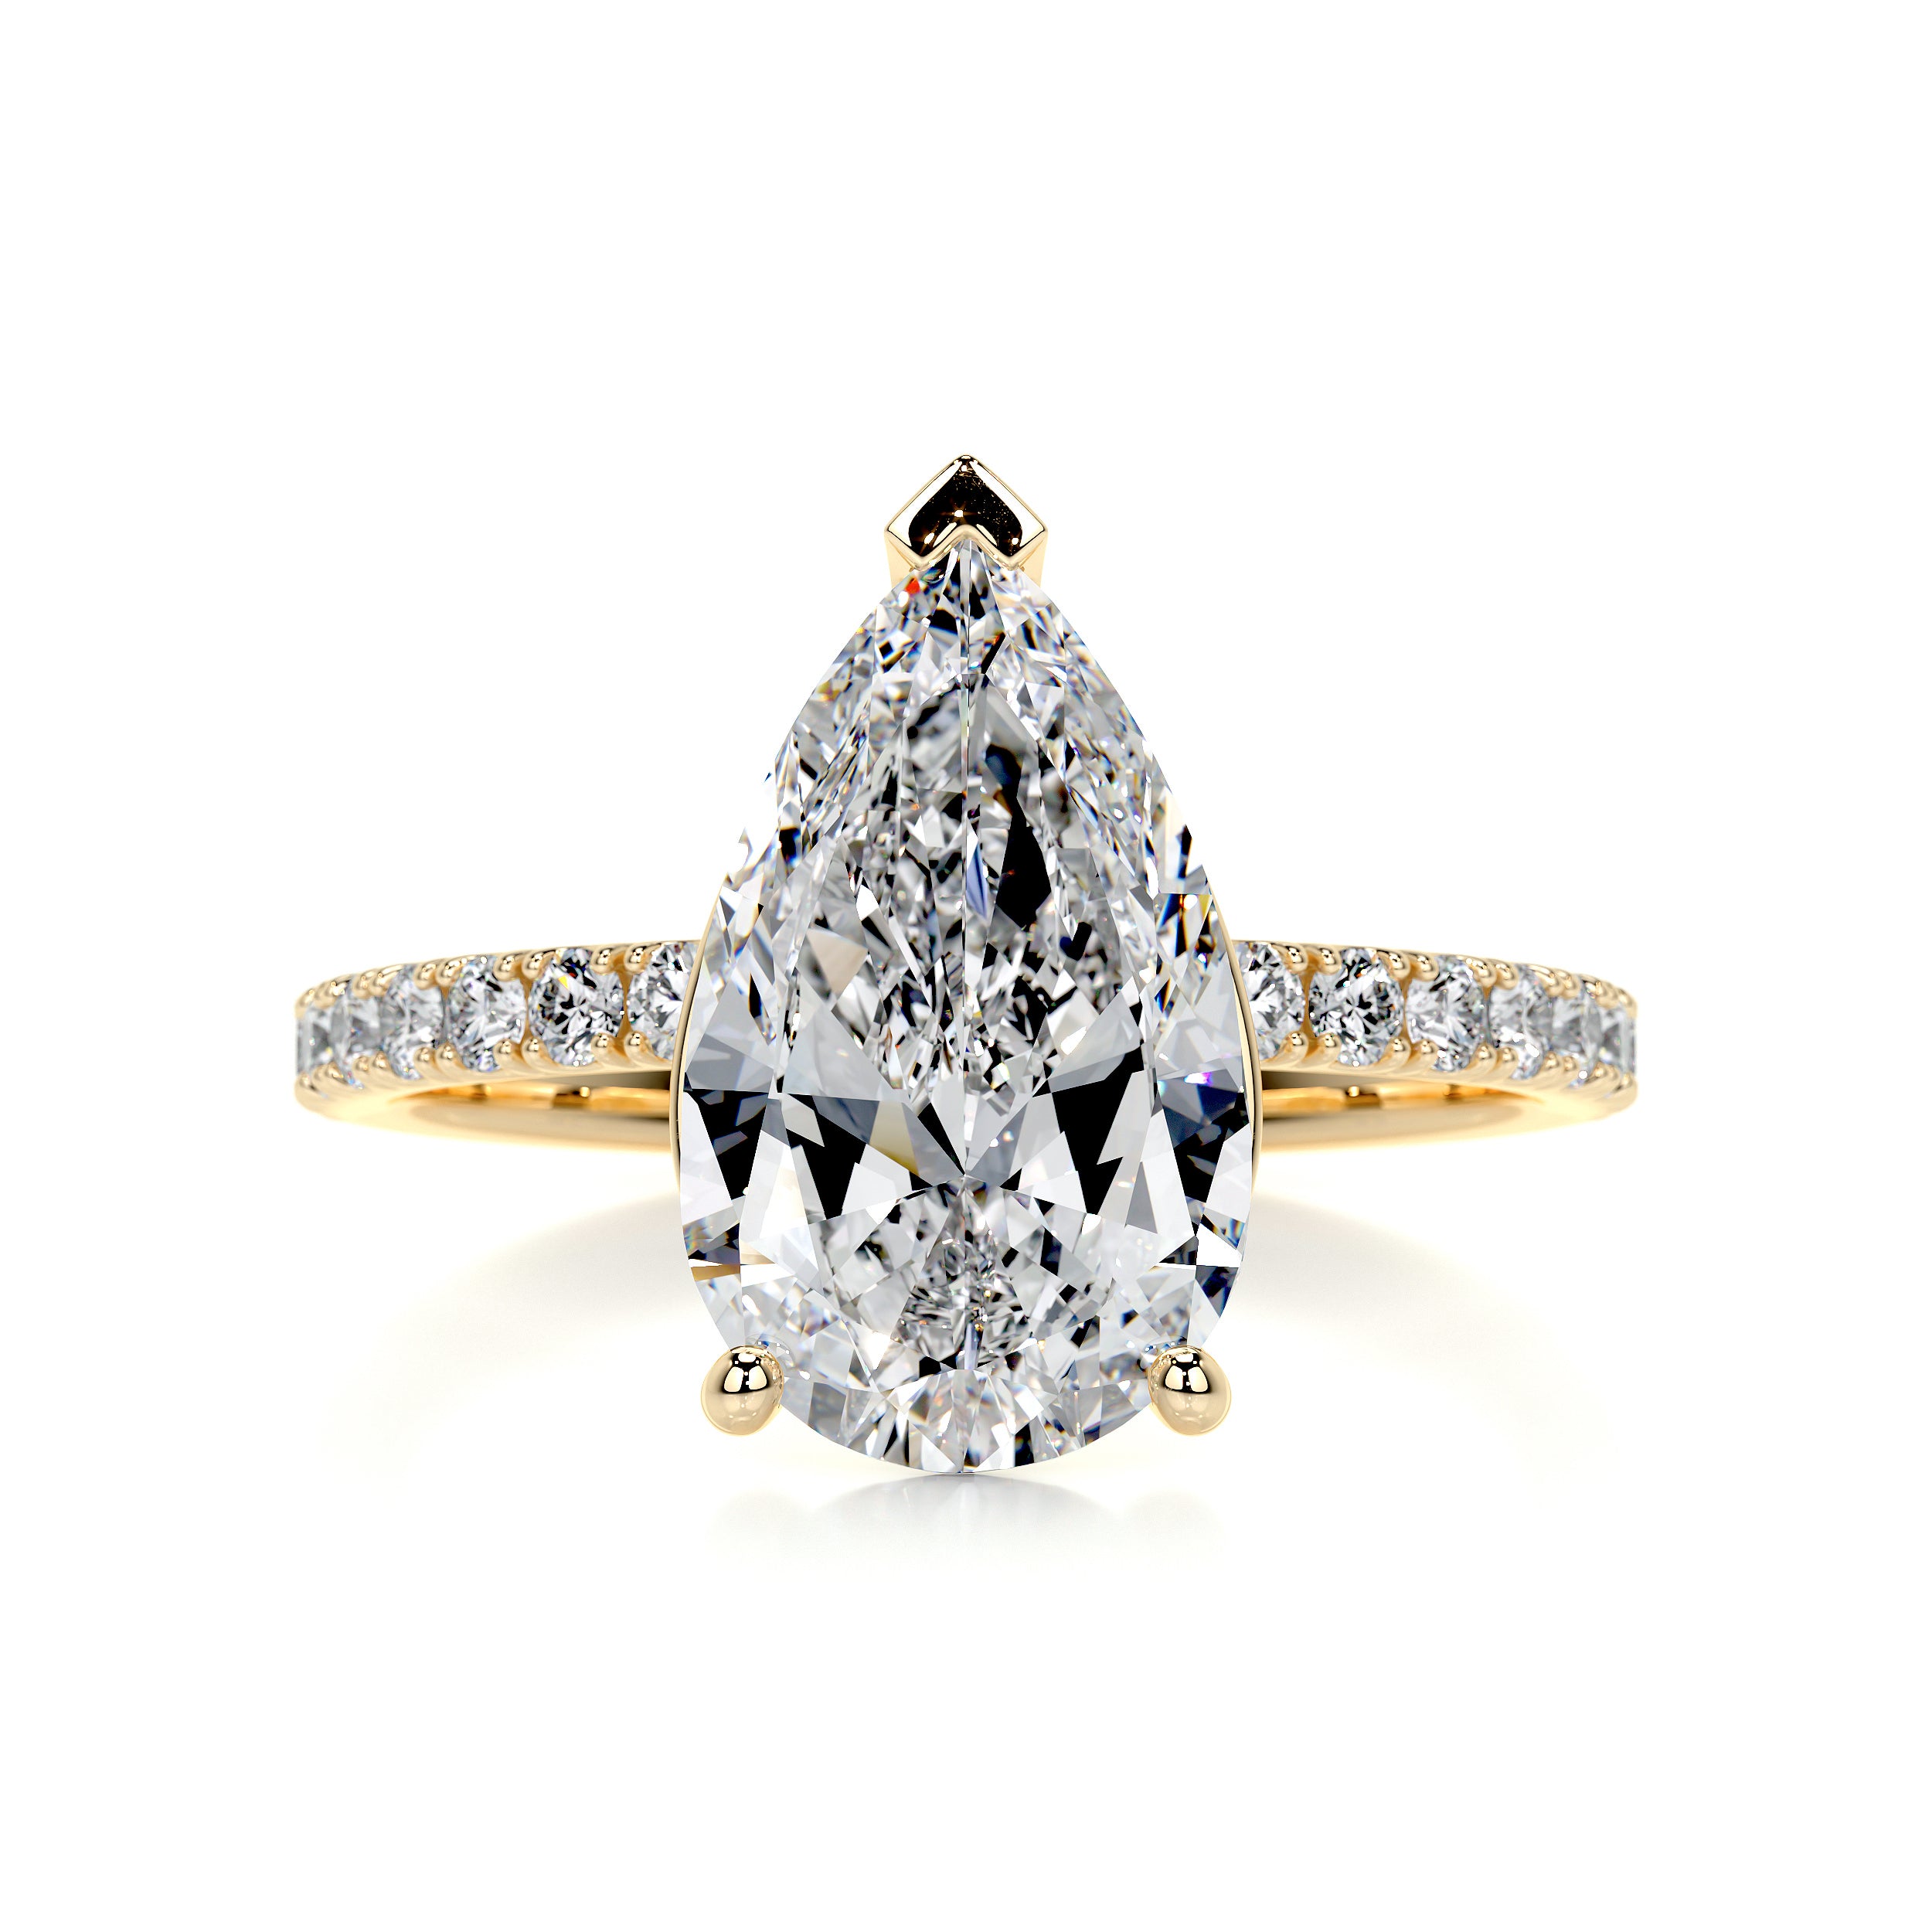 Jenny Diamond Engagement Ring   (5.5 Carat) -18K Yellow Gold